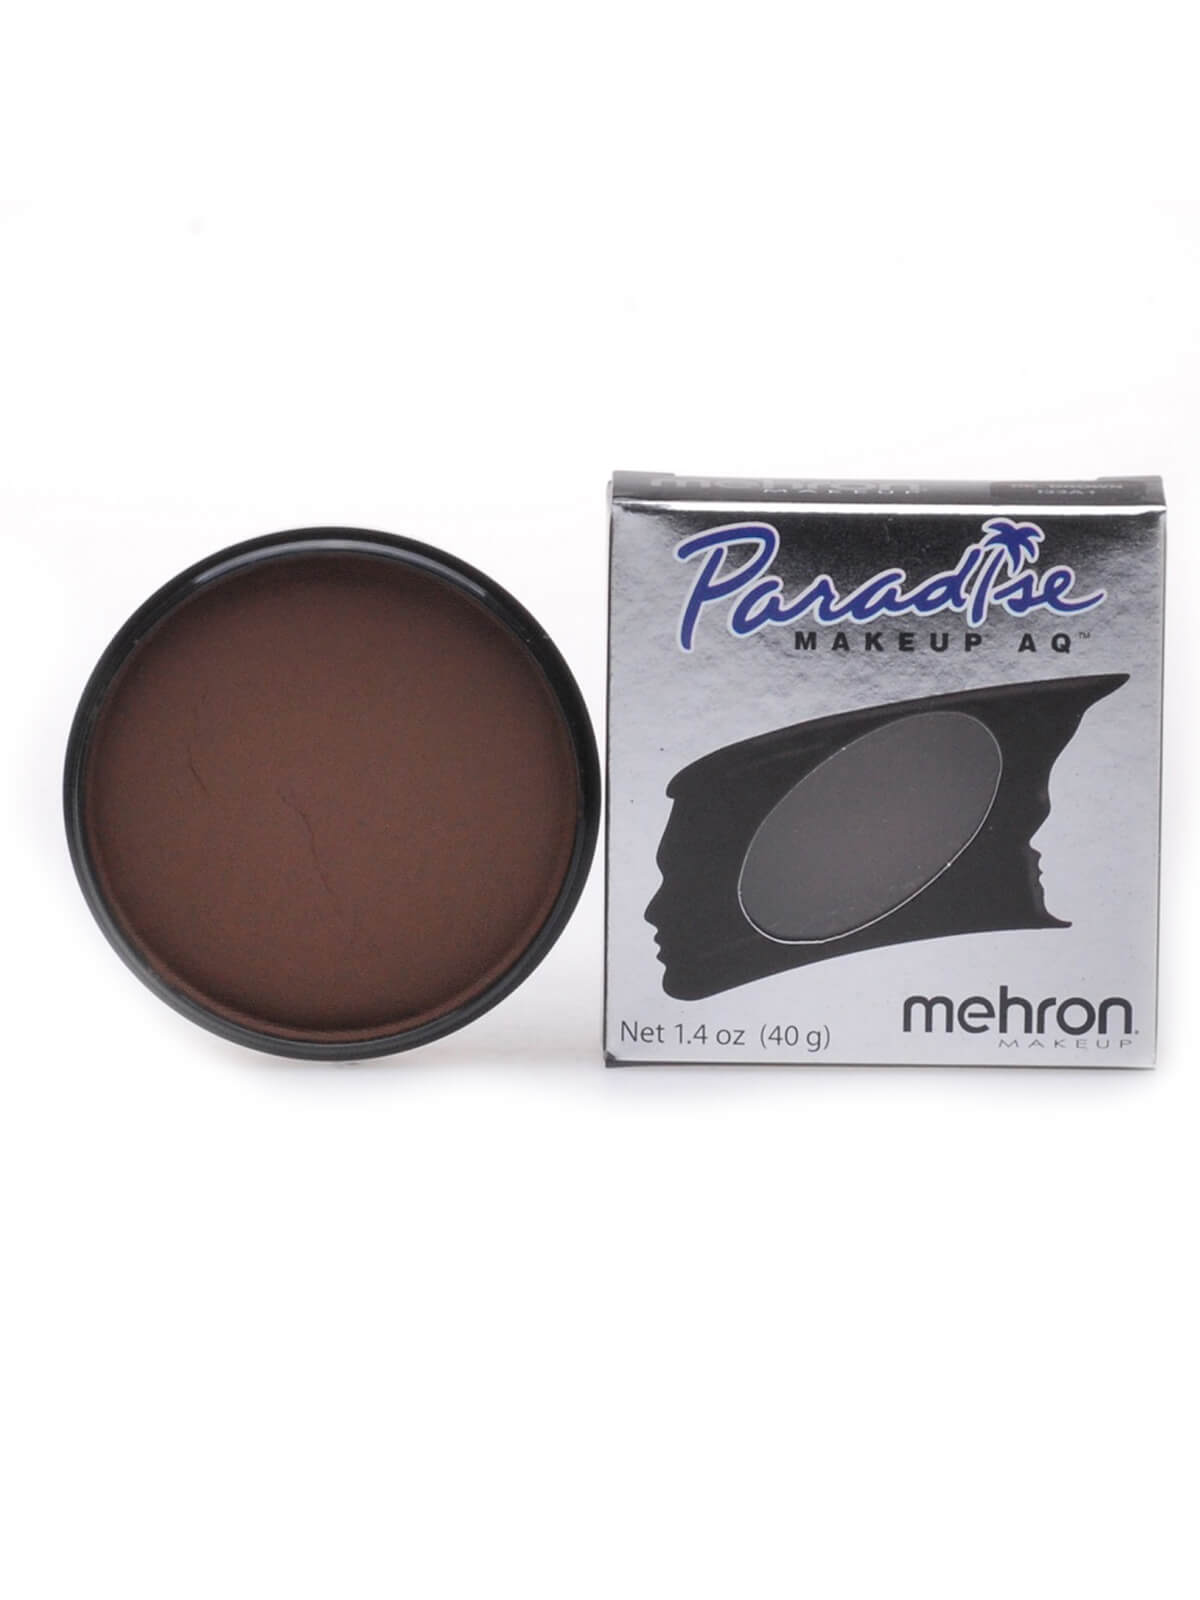 Mehron Paradise Makeup AQ - Basic -Dark Brown